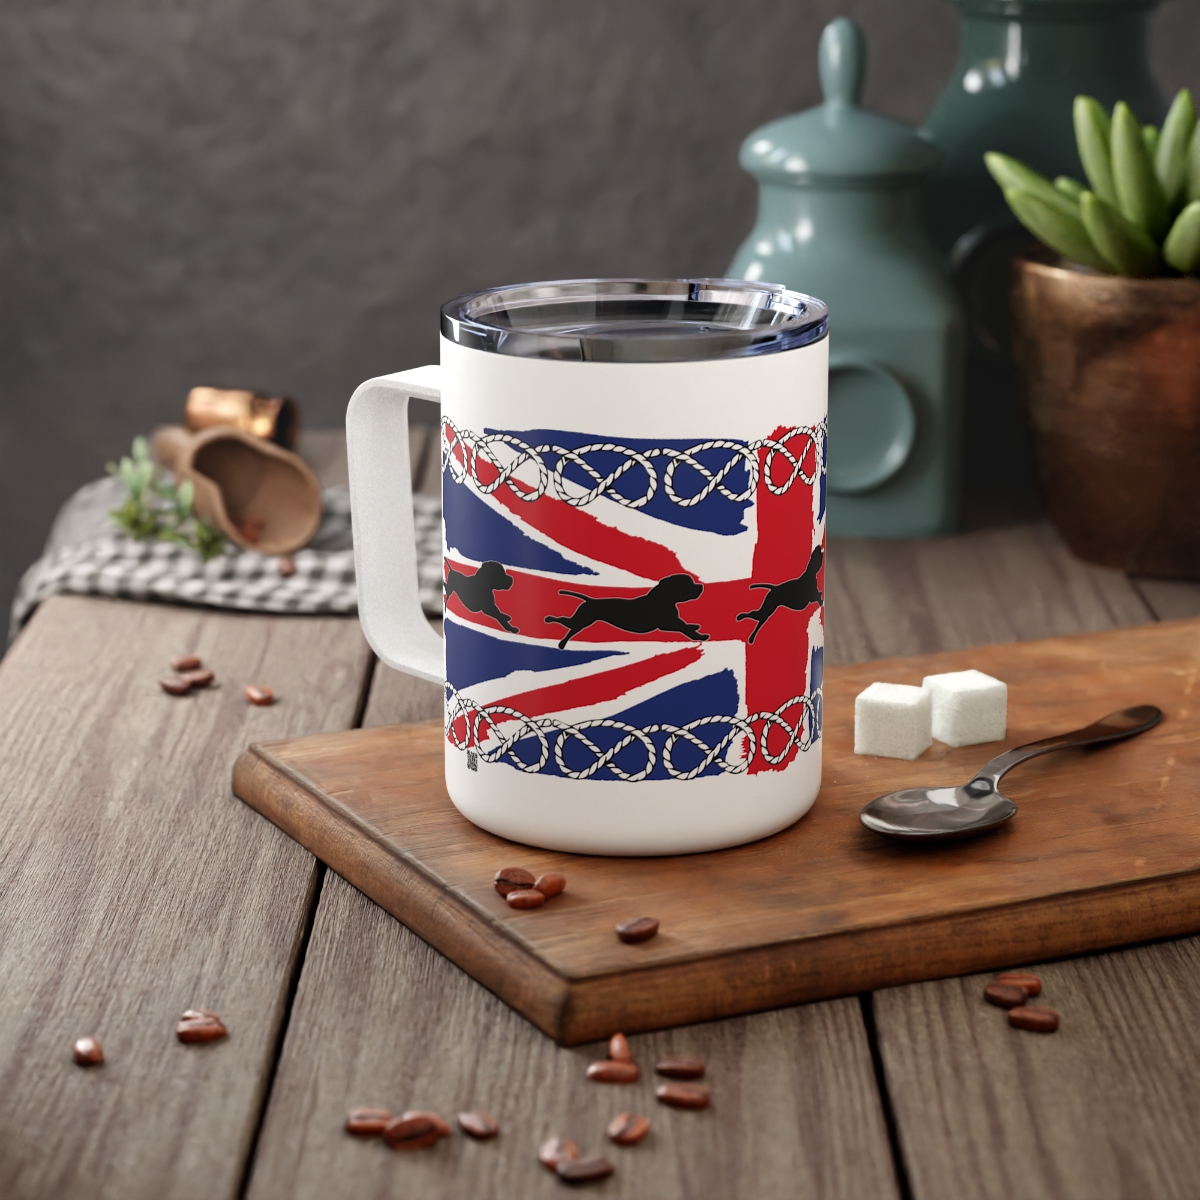 Union Jack Insulated Coffee Mug, 10oz - The Stafford Knot